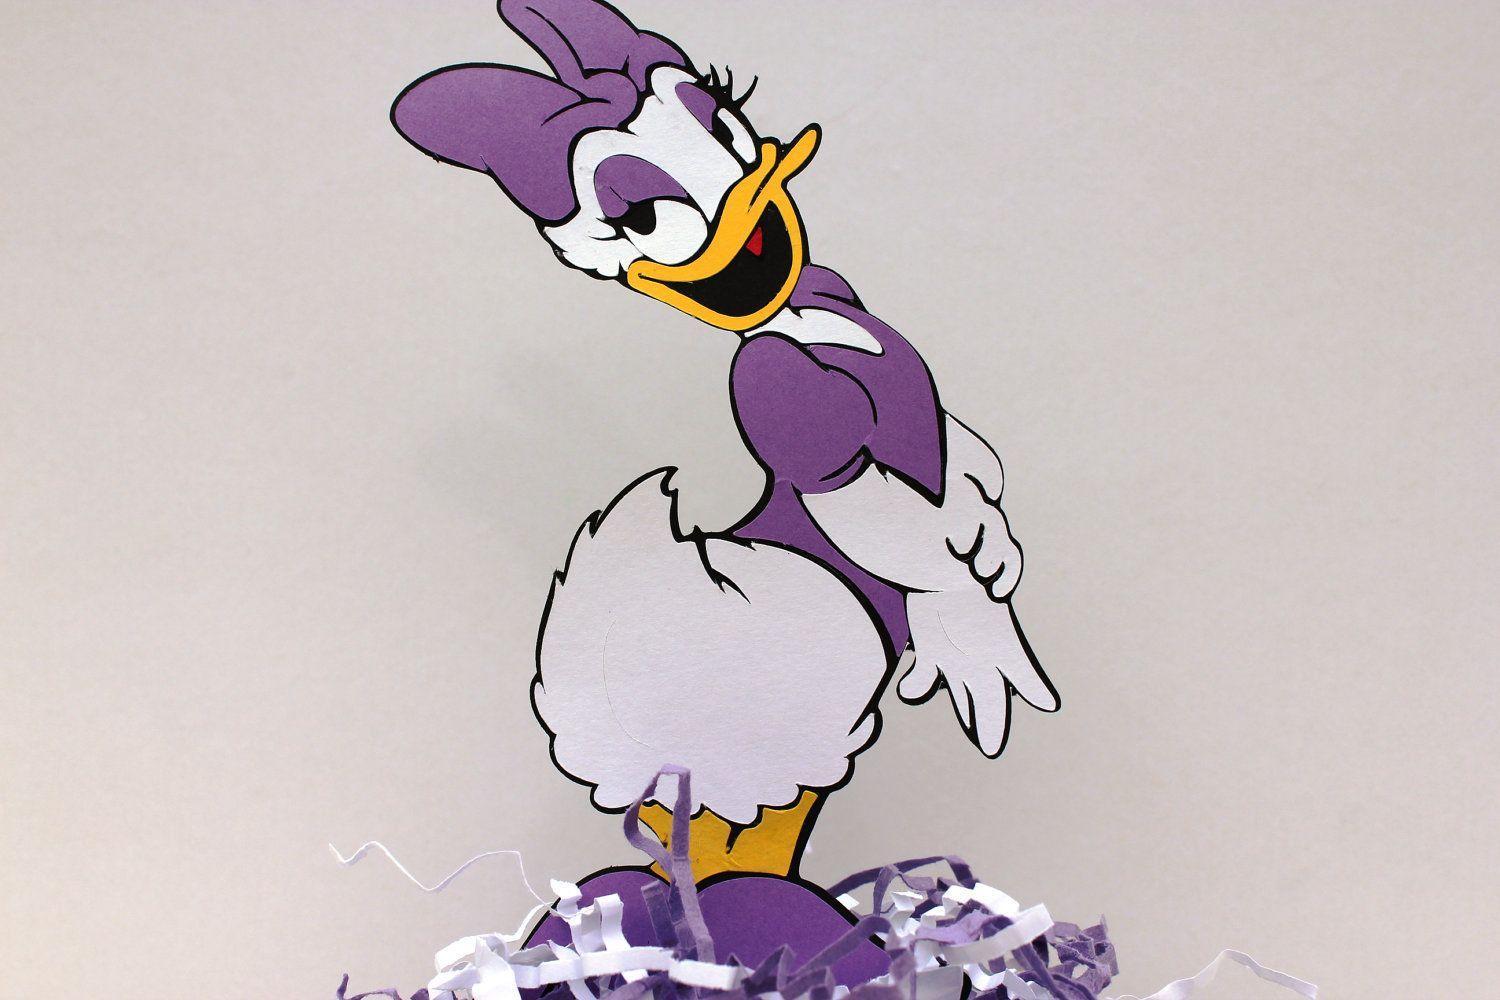 Daisy Duck (id: 45142)